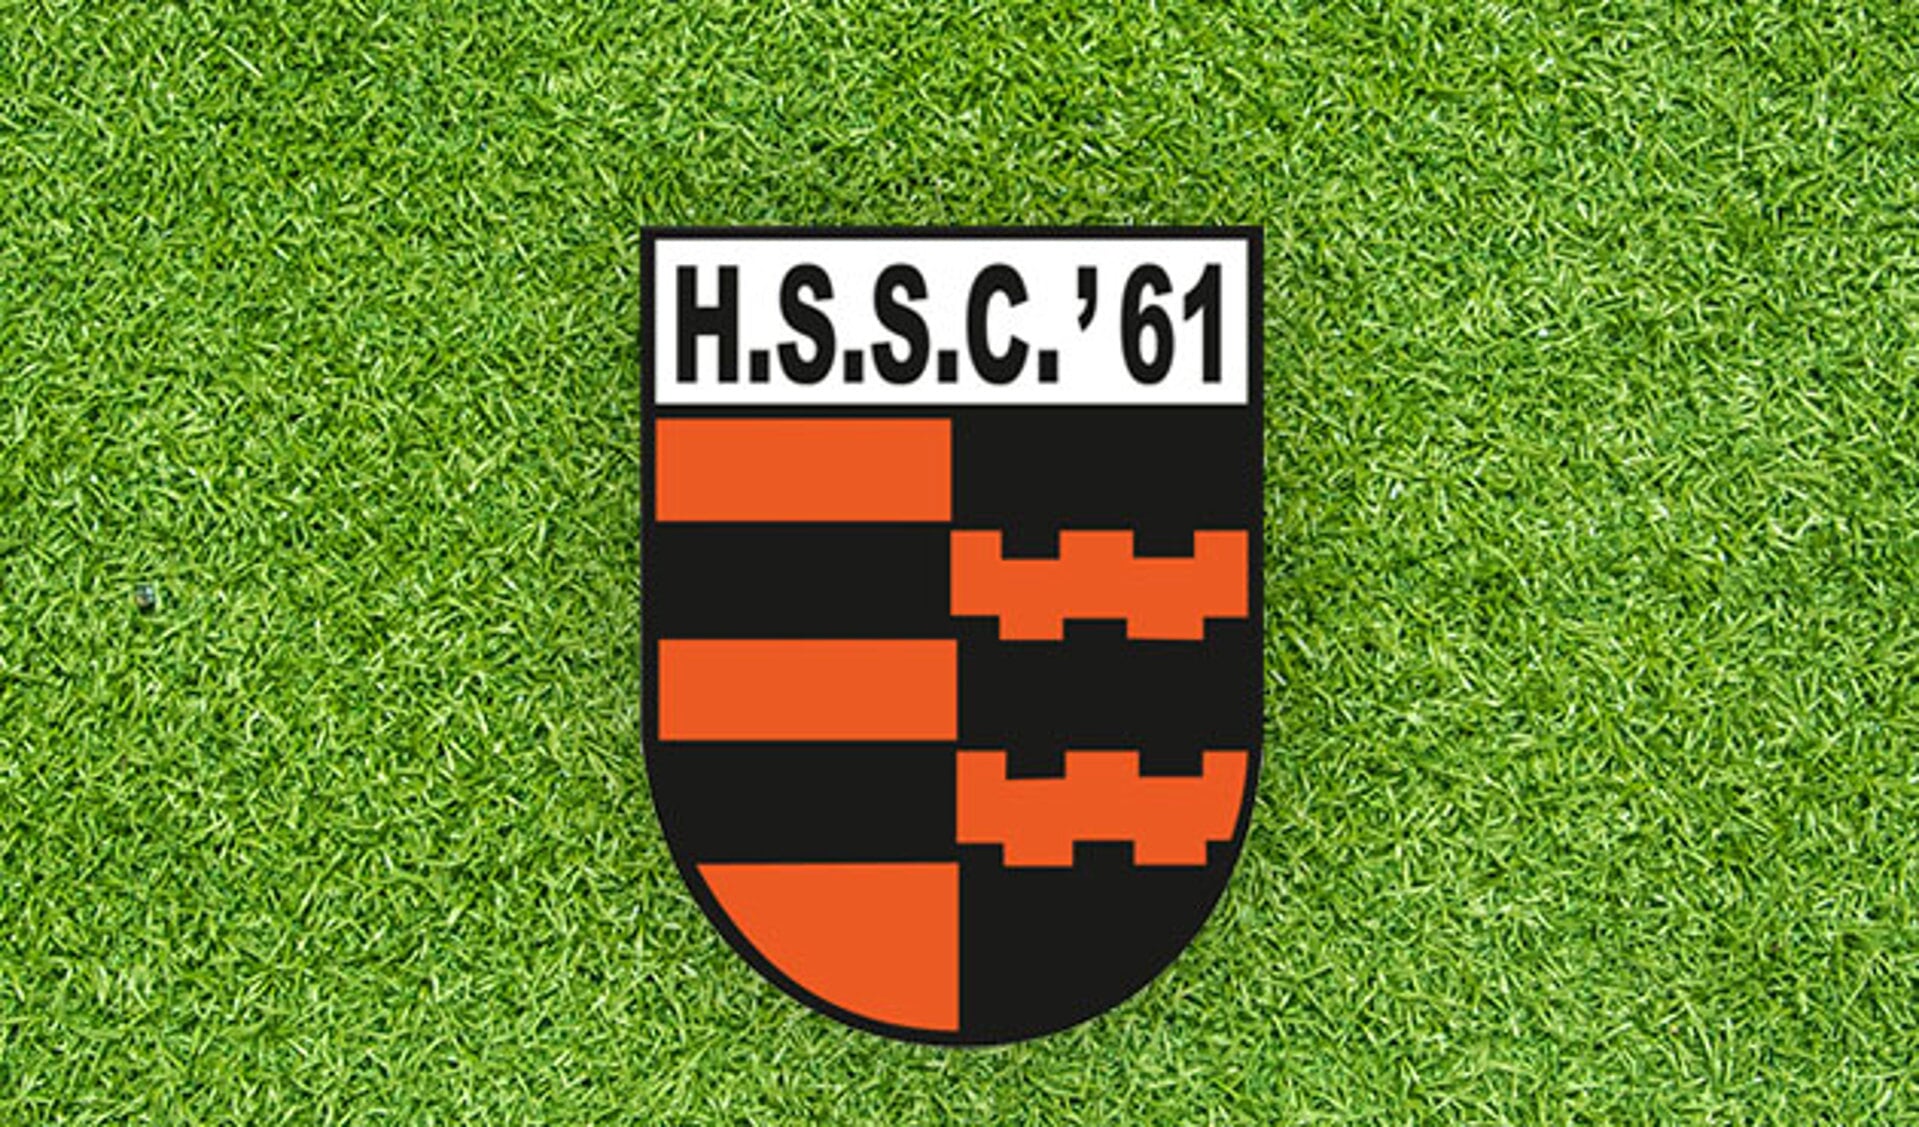 SoccerReporter Zomergast: Ad de Jong (HSSC'61)